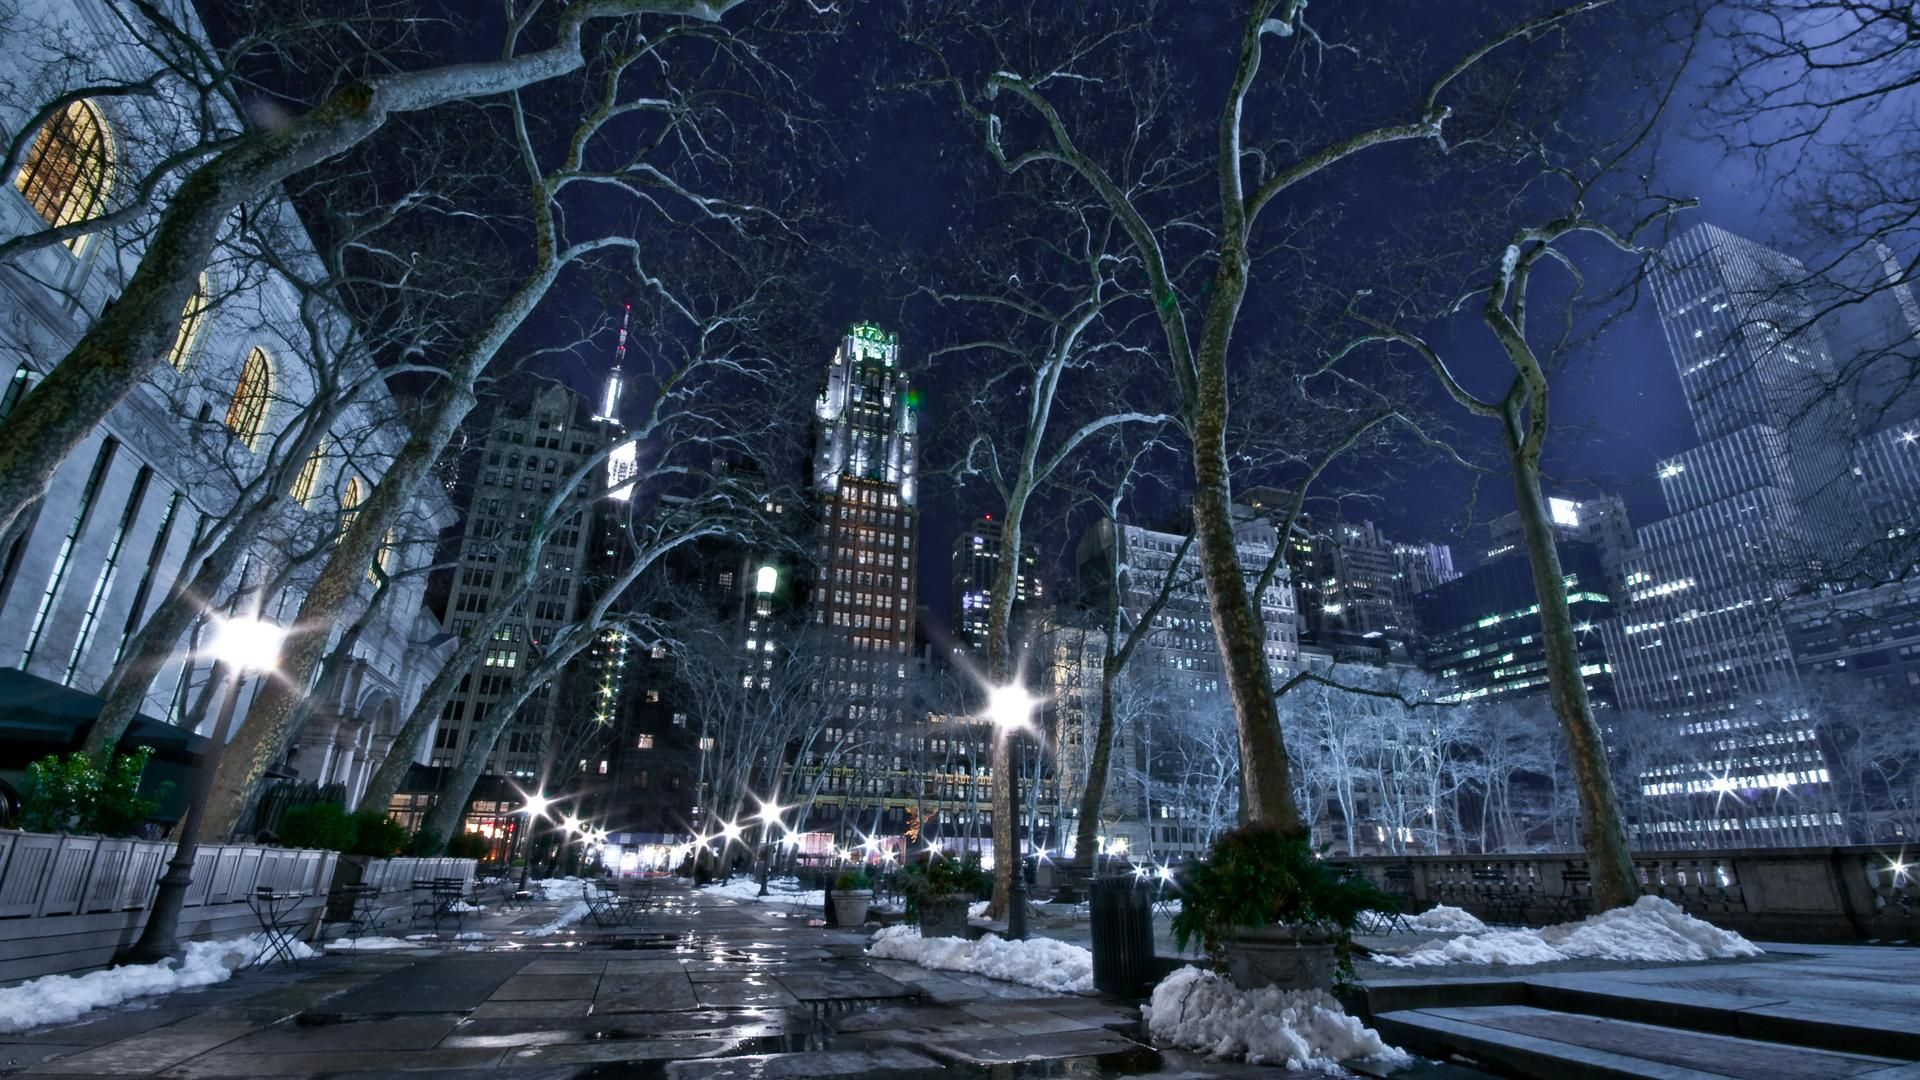 1920x1080 Winter City Wallpaper, High Definition, High Quality, Widescreen | New york winter, New york travel, Winter city